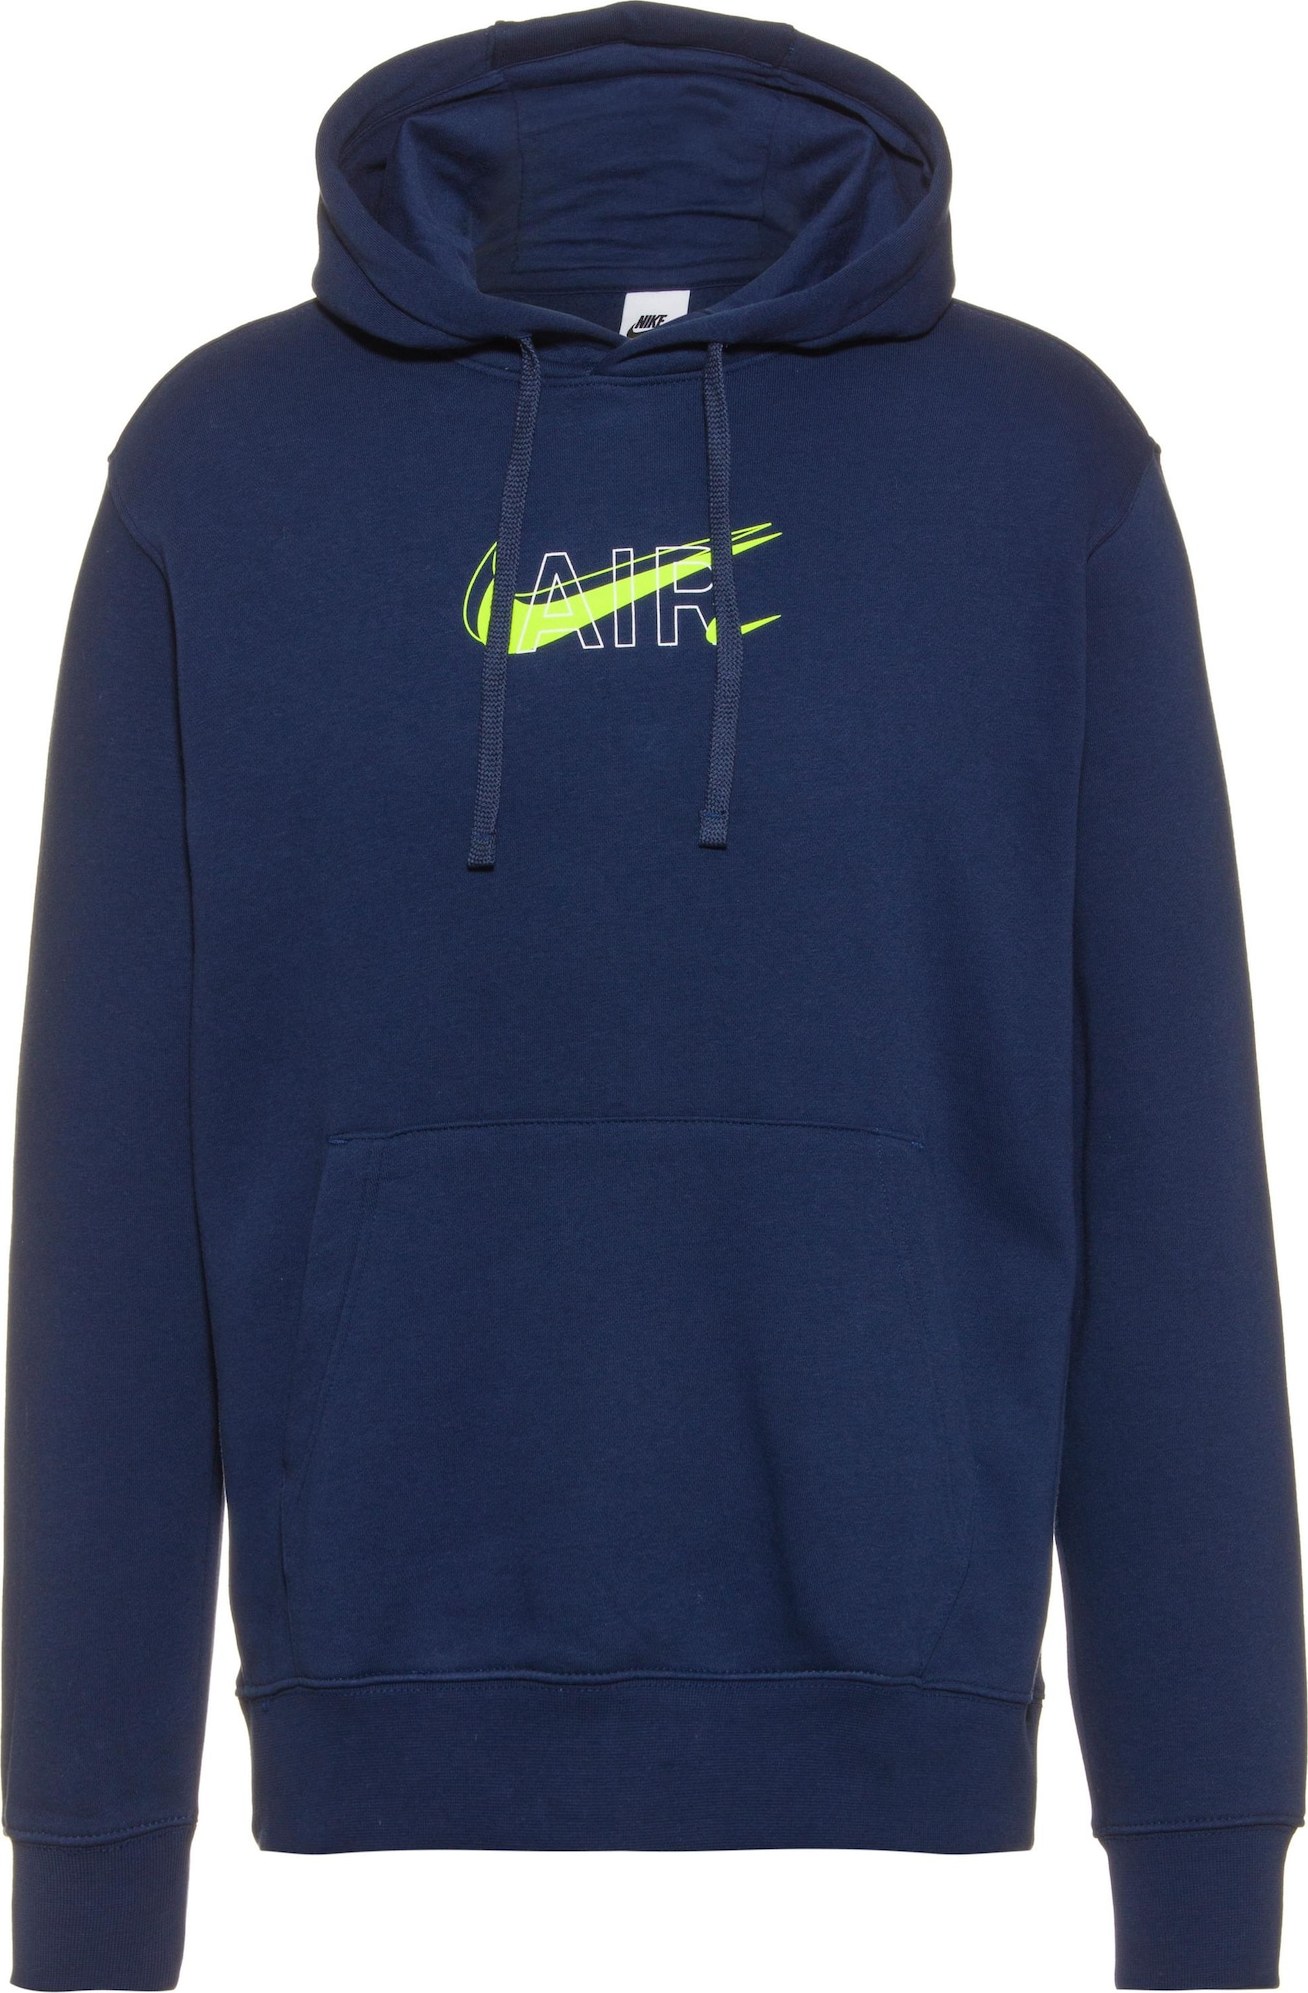 Nike Sportswear Mikina 'Air Pack' námořnická modř / limetková